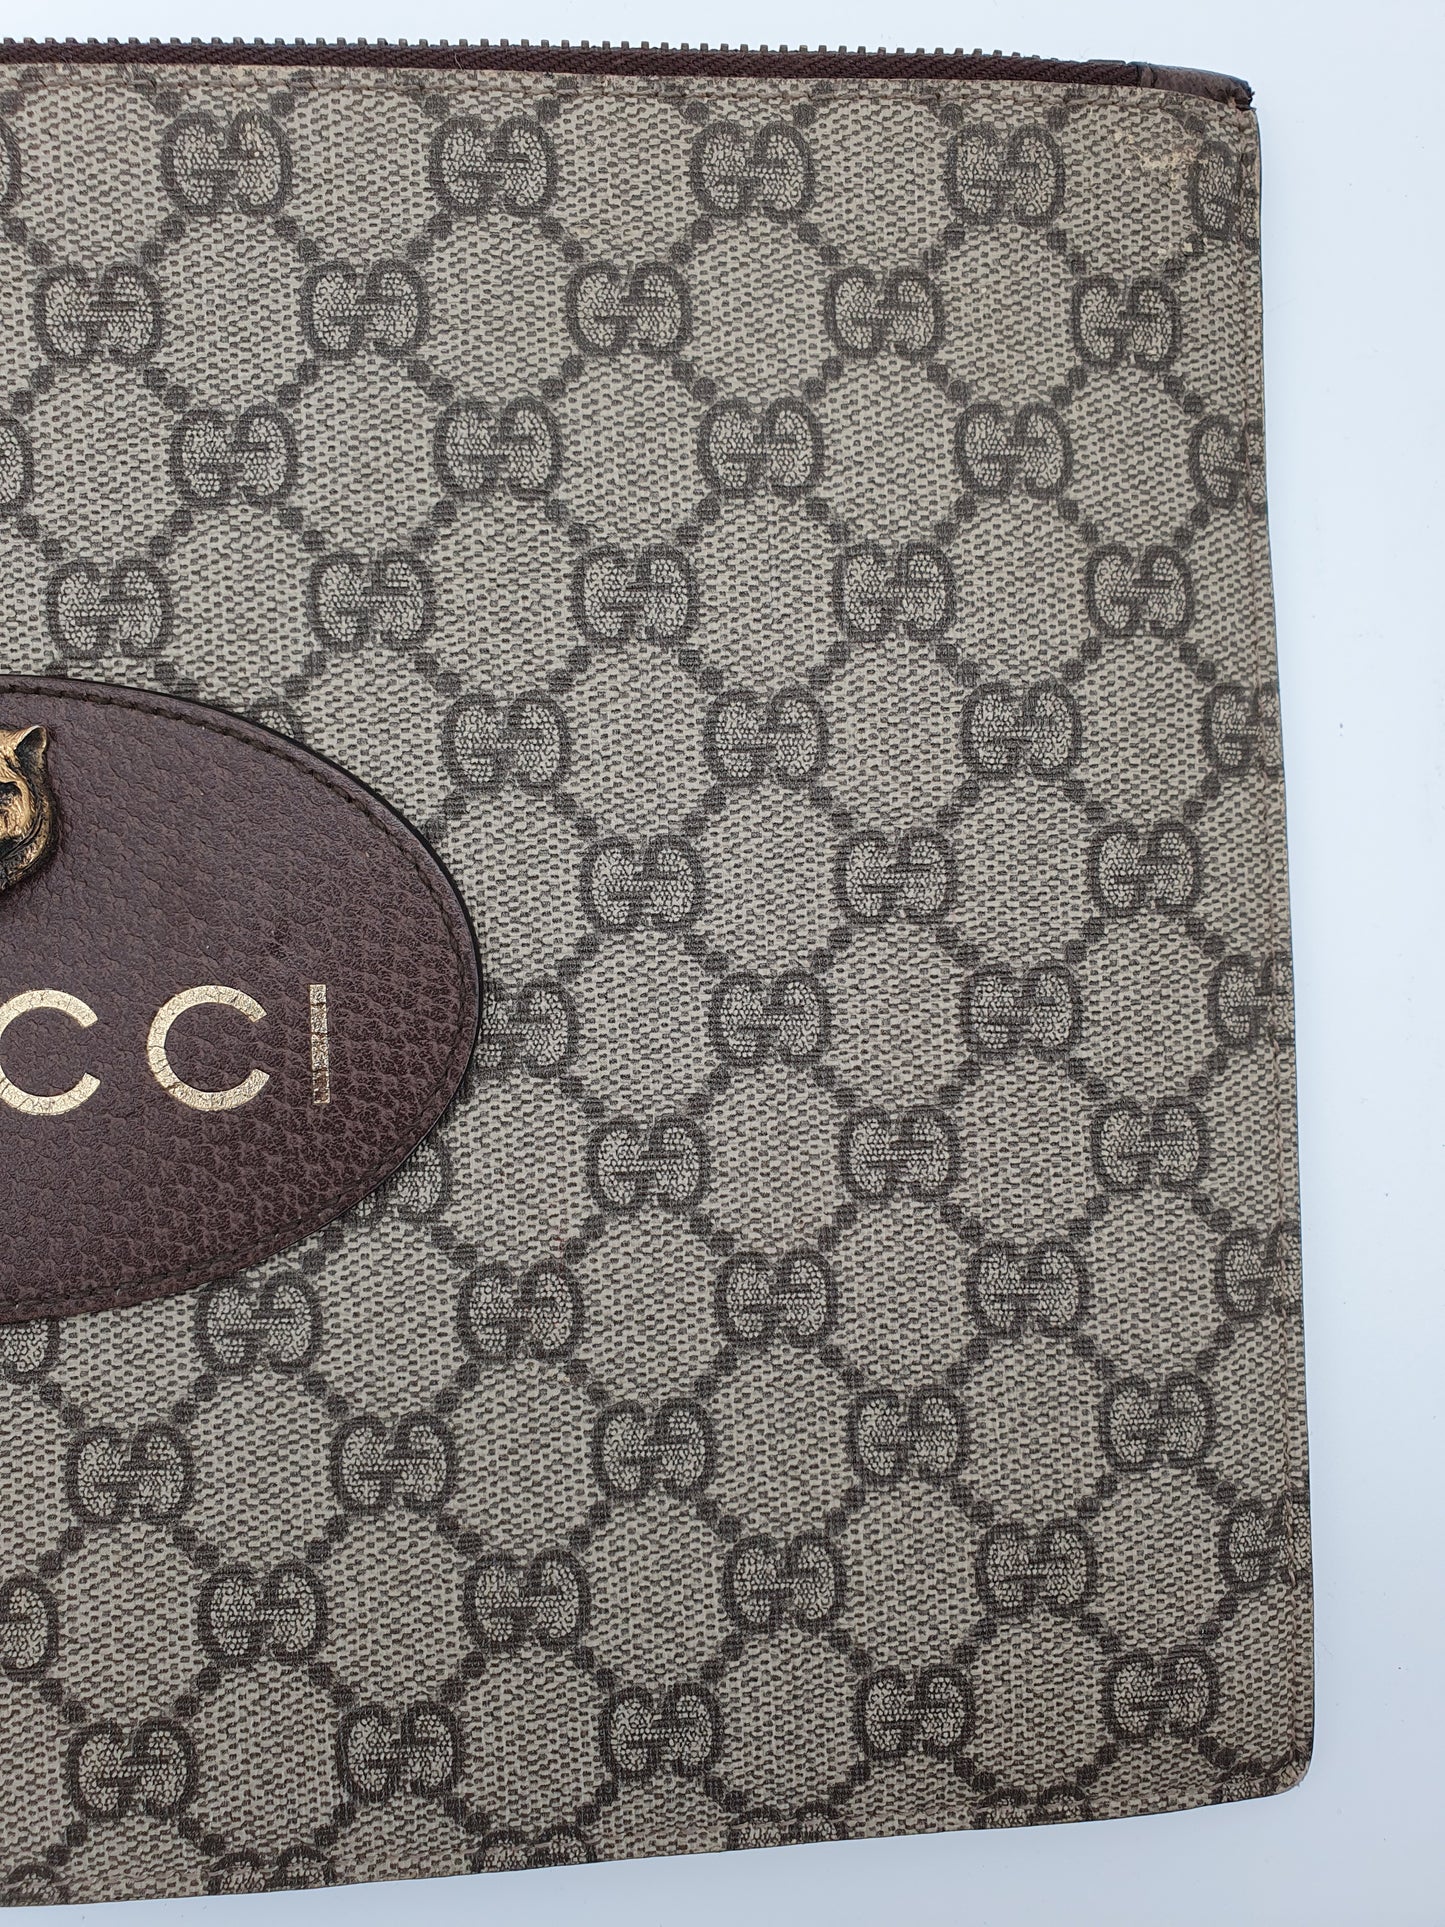 Gucci neo gg monogram animalier clutch bag